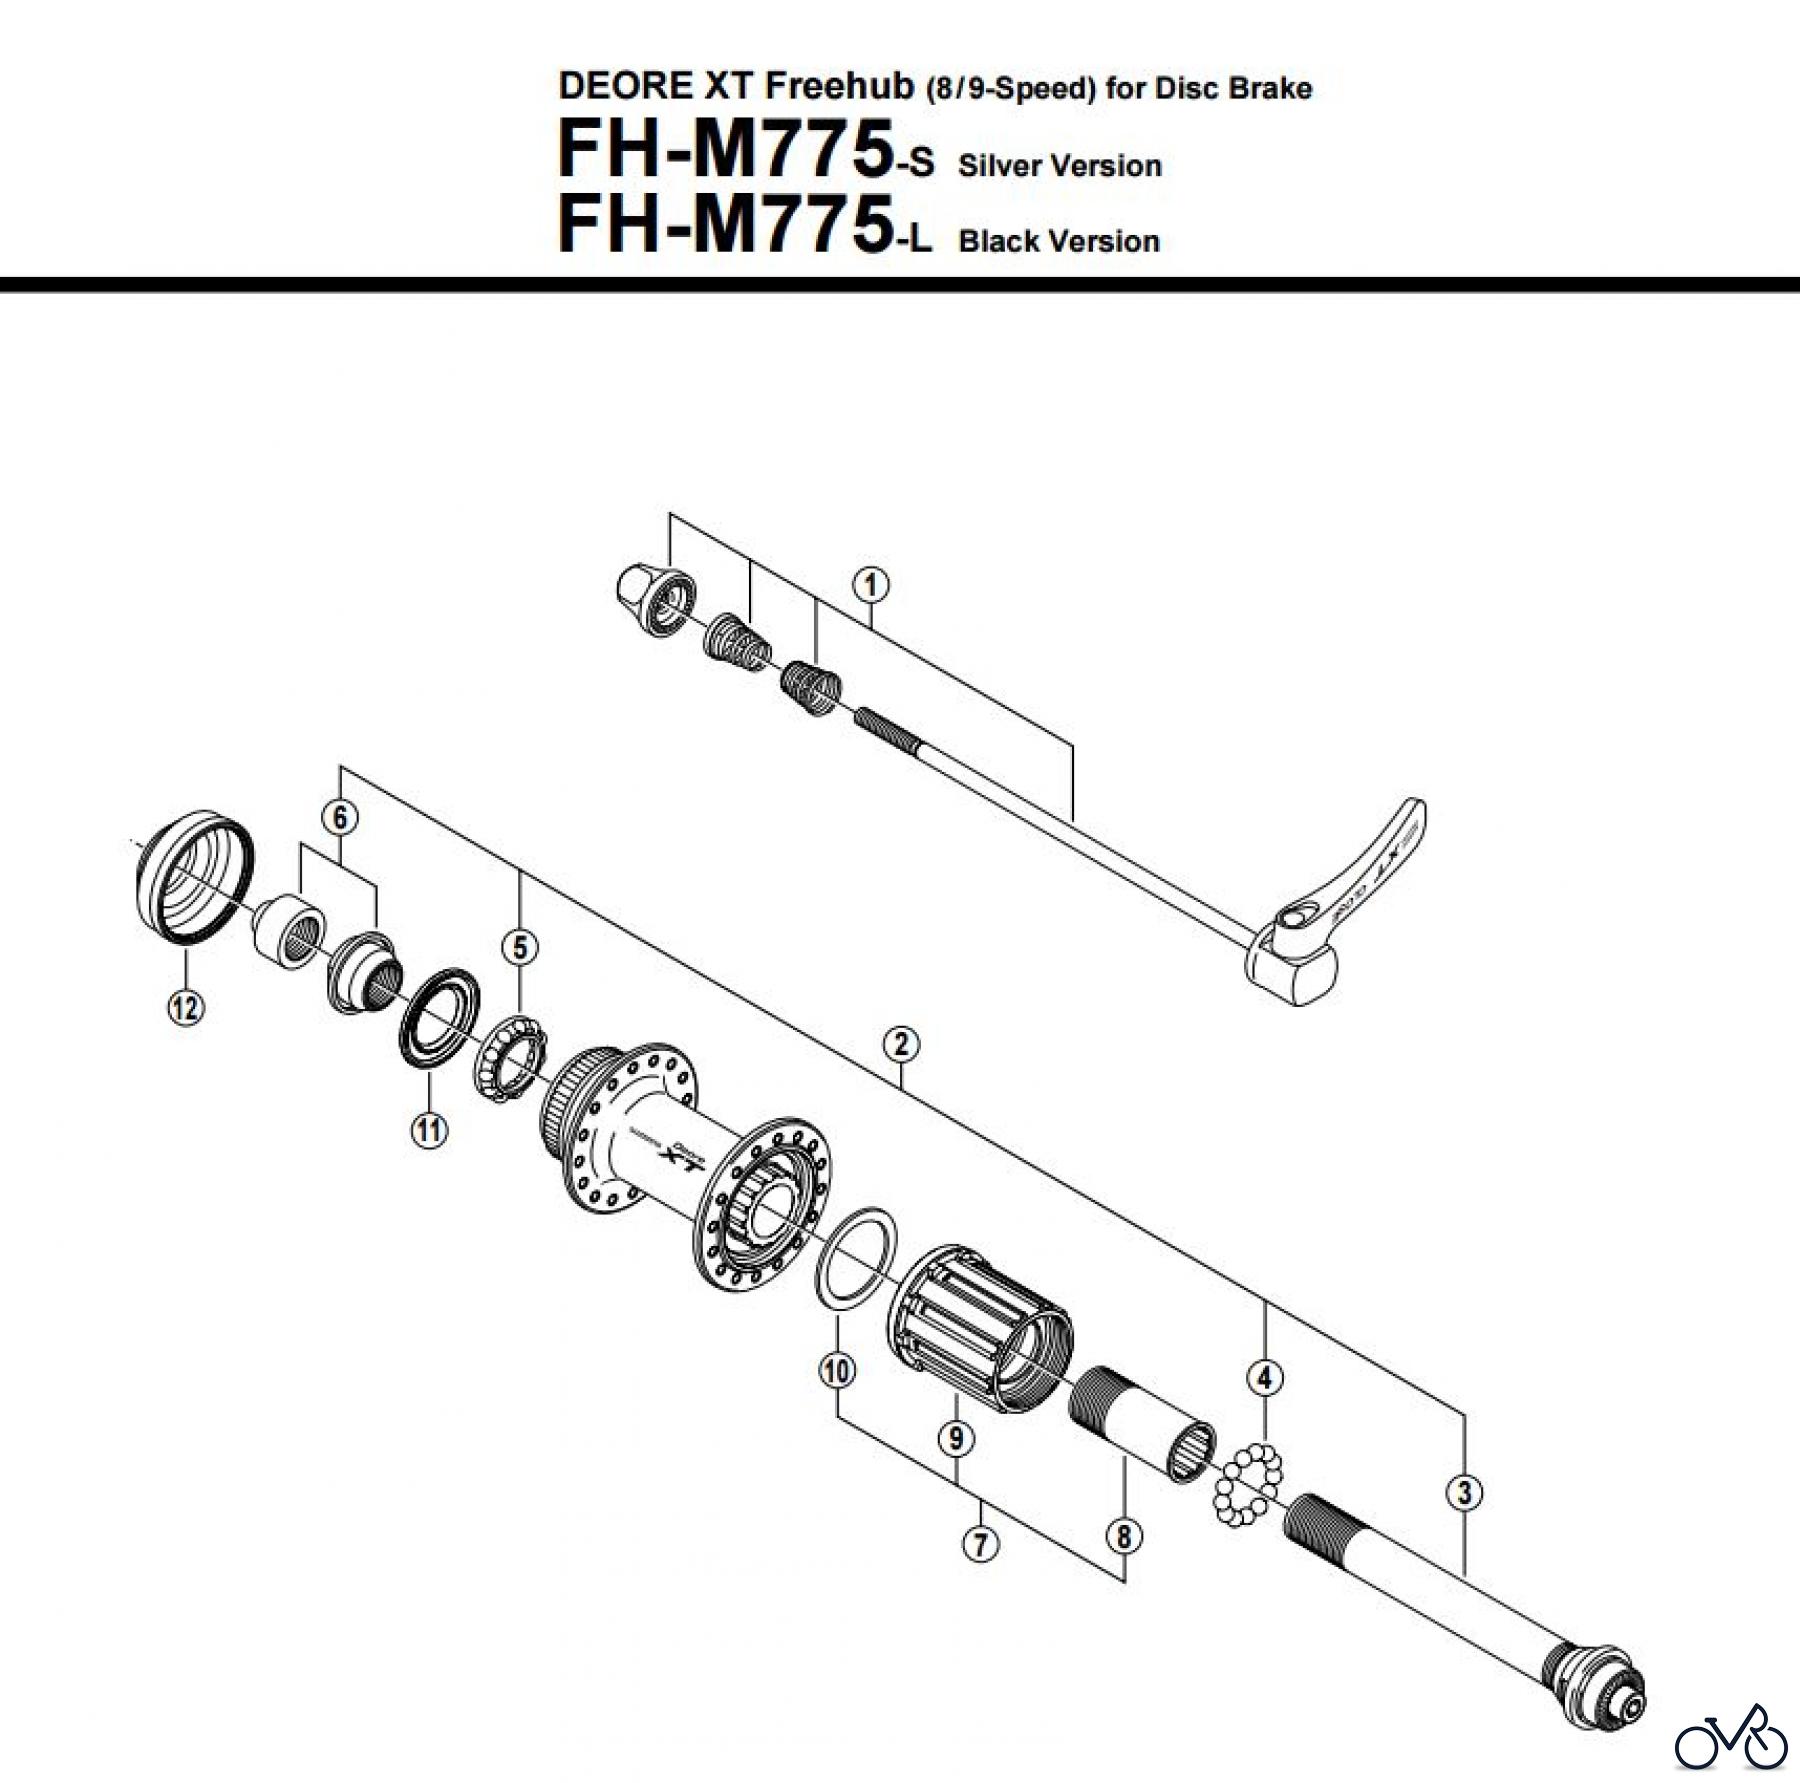  Shimano FH Free Hub - Freilaufnabe FH-M775 -2700A DEORE XT Freehub (8/9-Speed) for Disc Brake